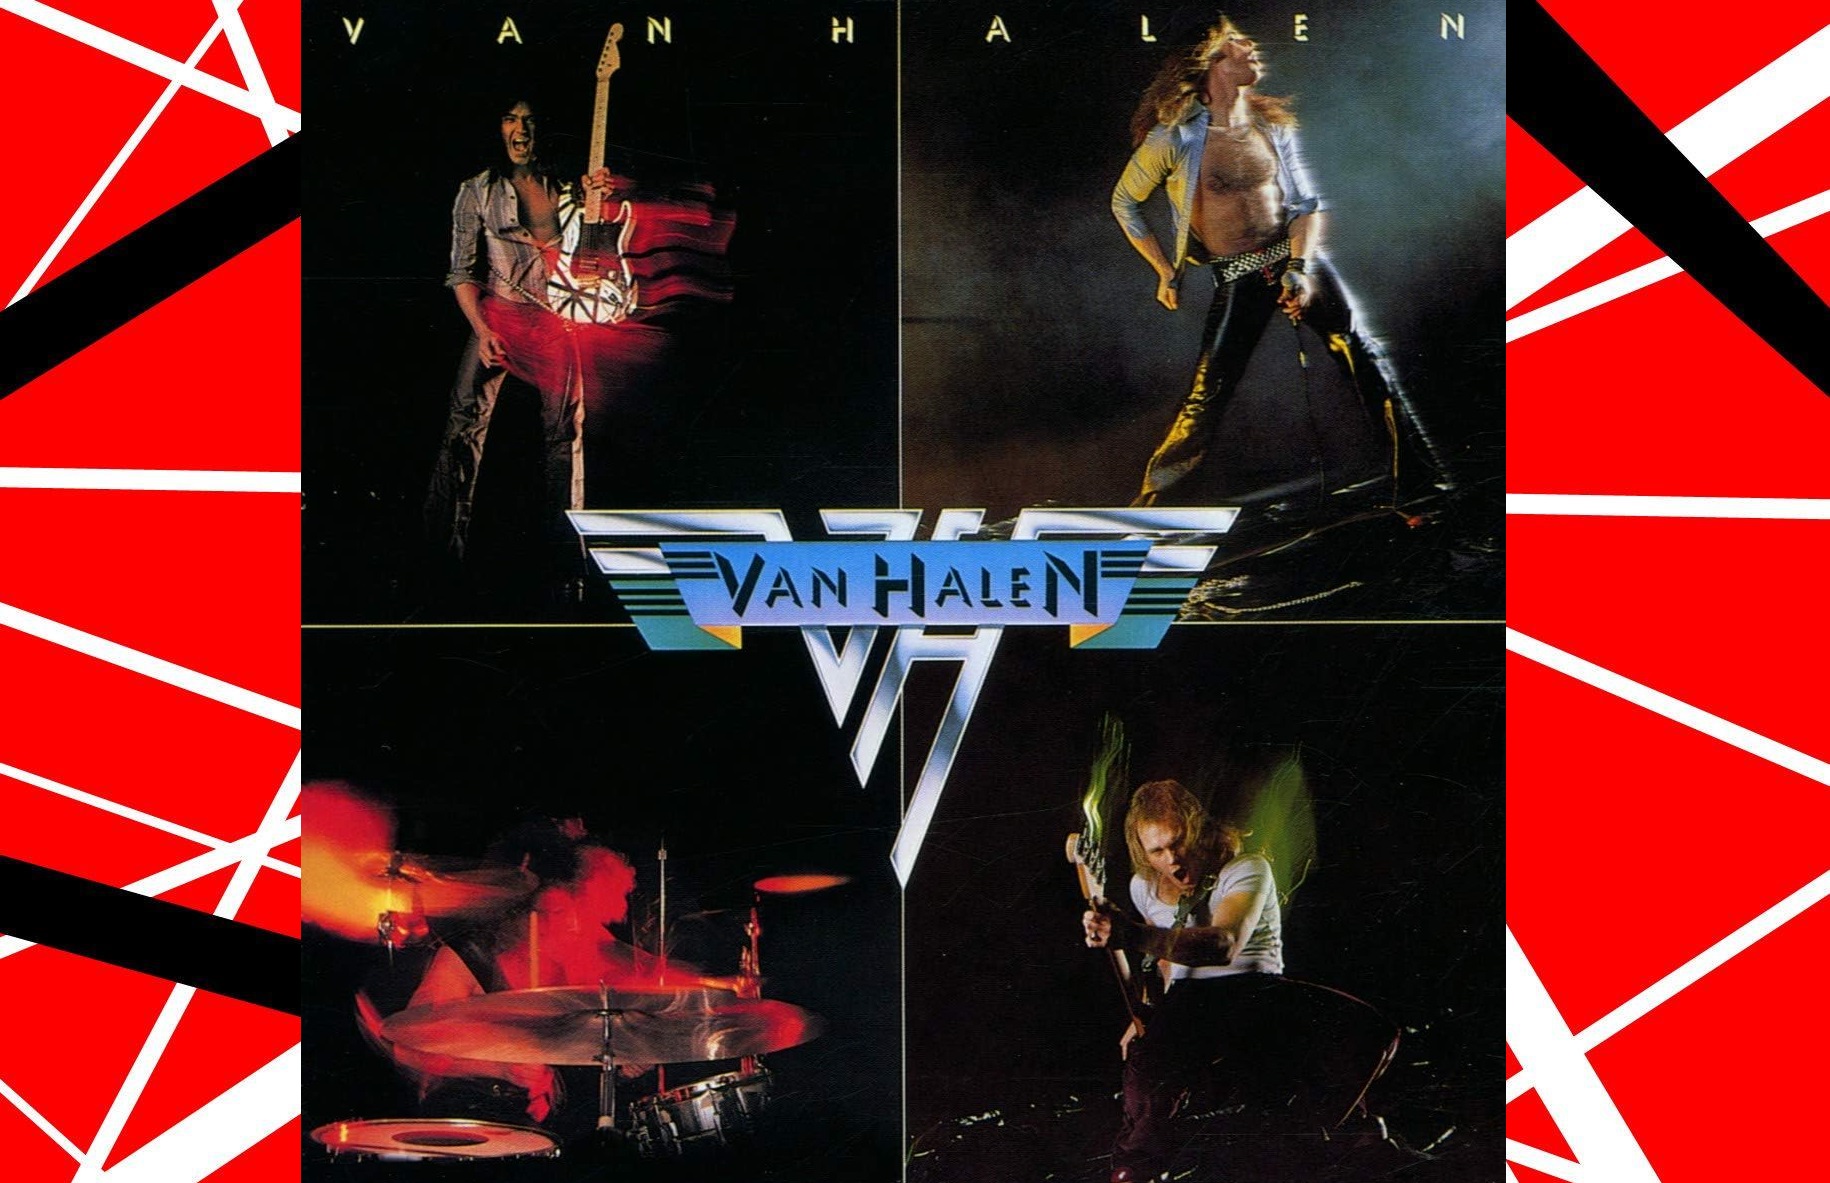 Eddie Van Halen Born On This Day January 26th, 1955